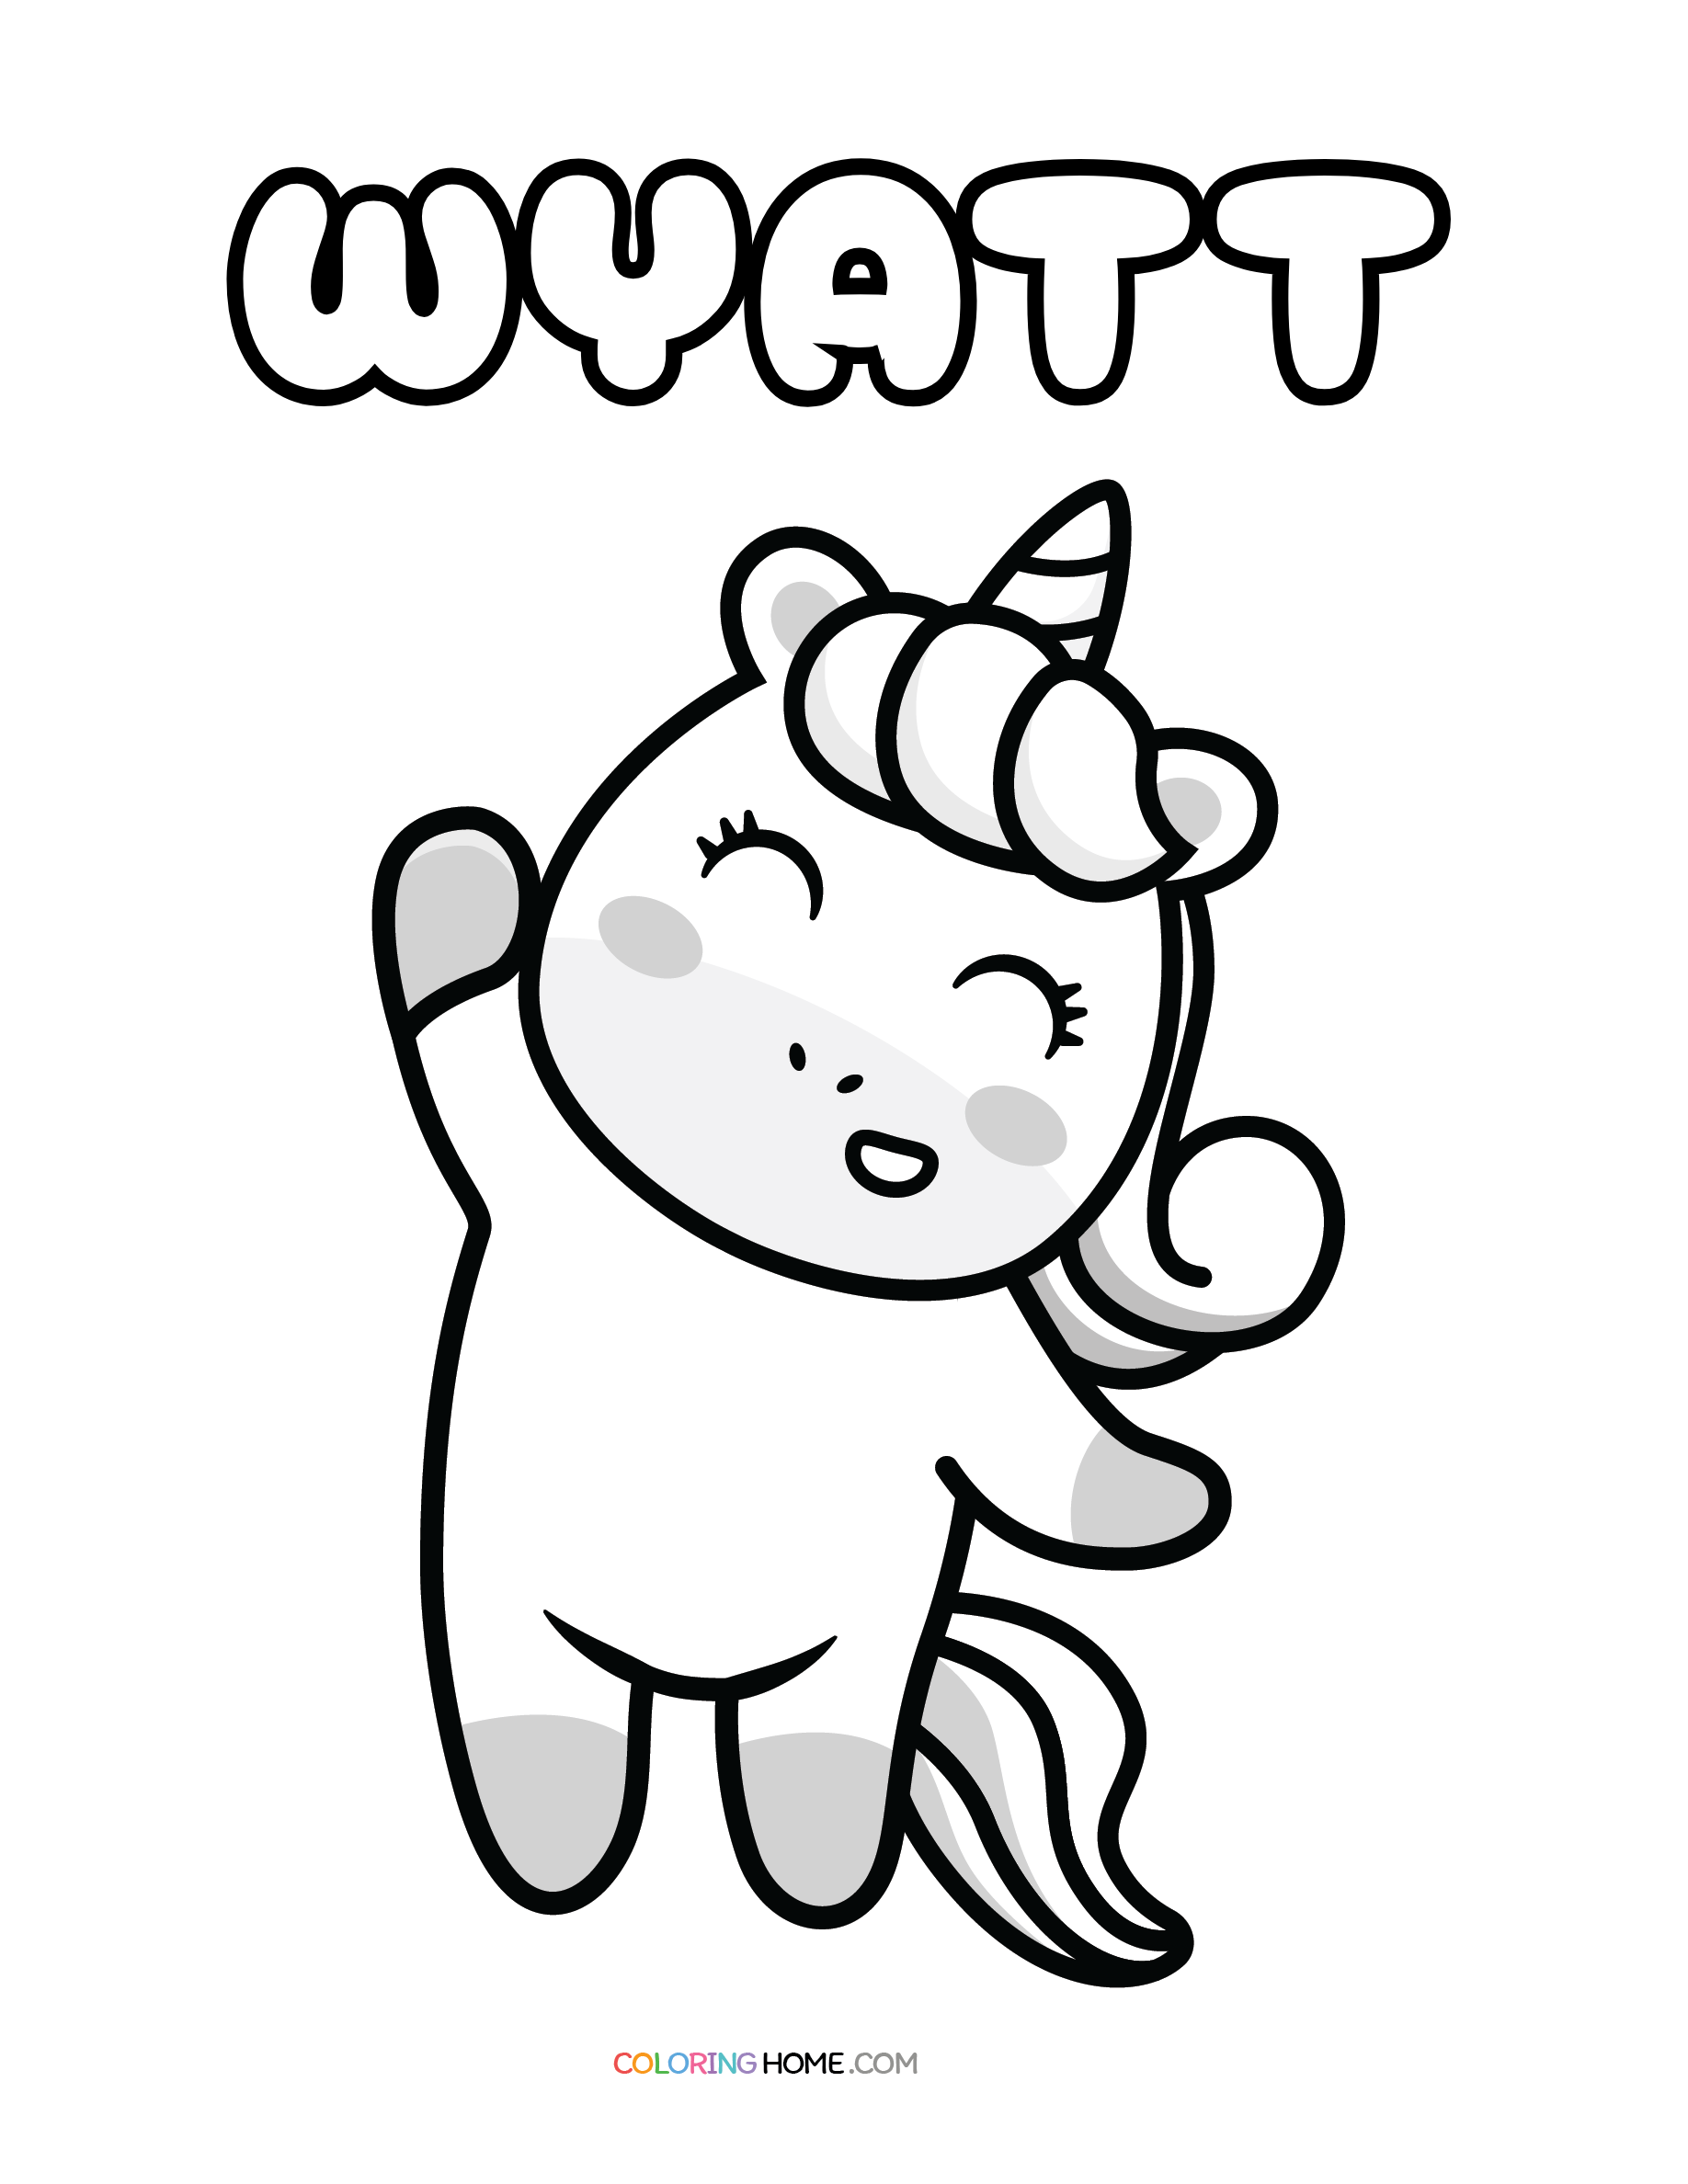 Wyatt unicorn coloring page